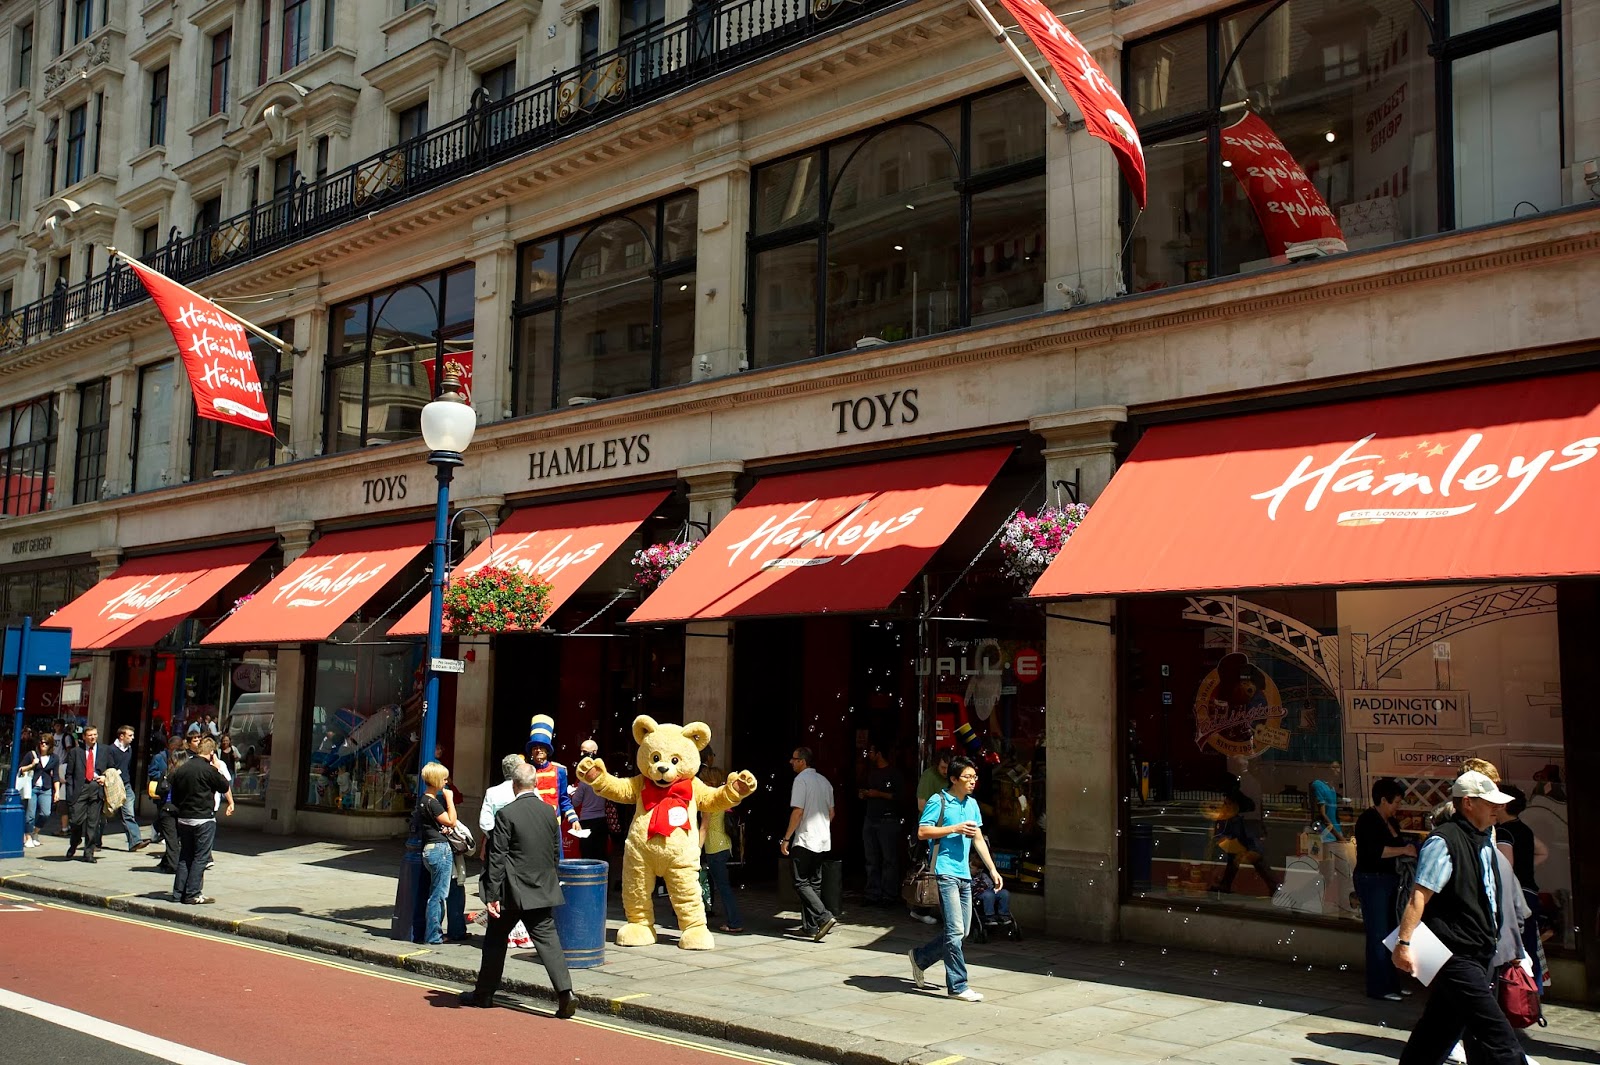 Hamleys london. Хамлес магазин игрушек Лондон. Hamleys магазин игрушек в Лондоне. Хемлис магазин игрушек в Лондоне. Магазин Хэмлис в Лондоне.